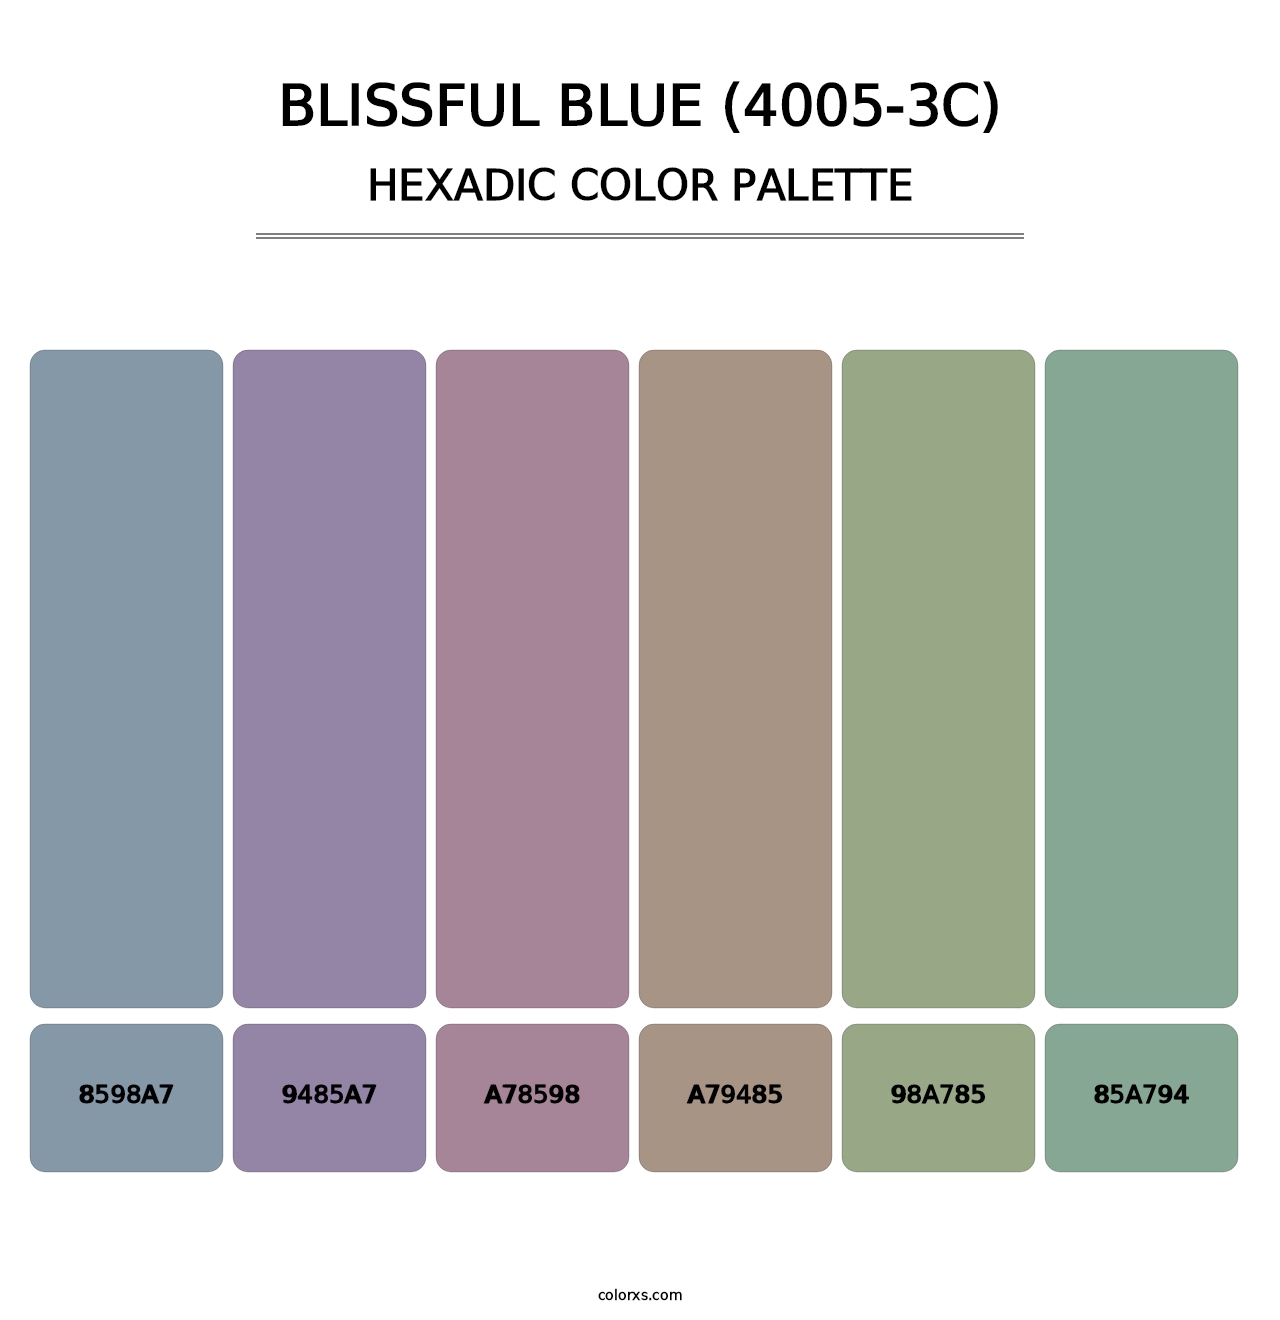 Blissful Blue (4005-3C) - Hexadic Color Palette